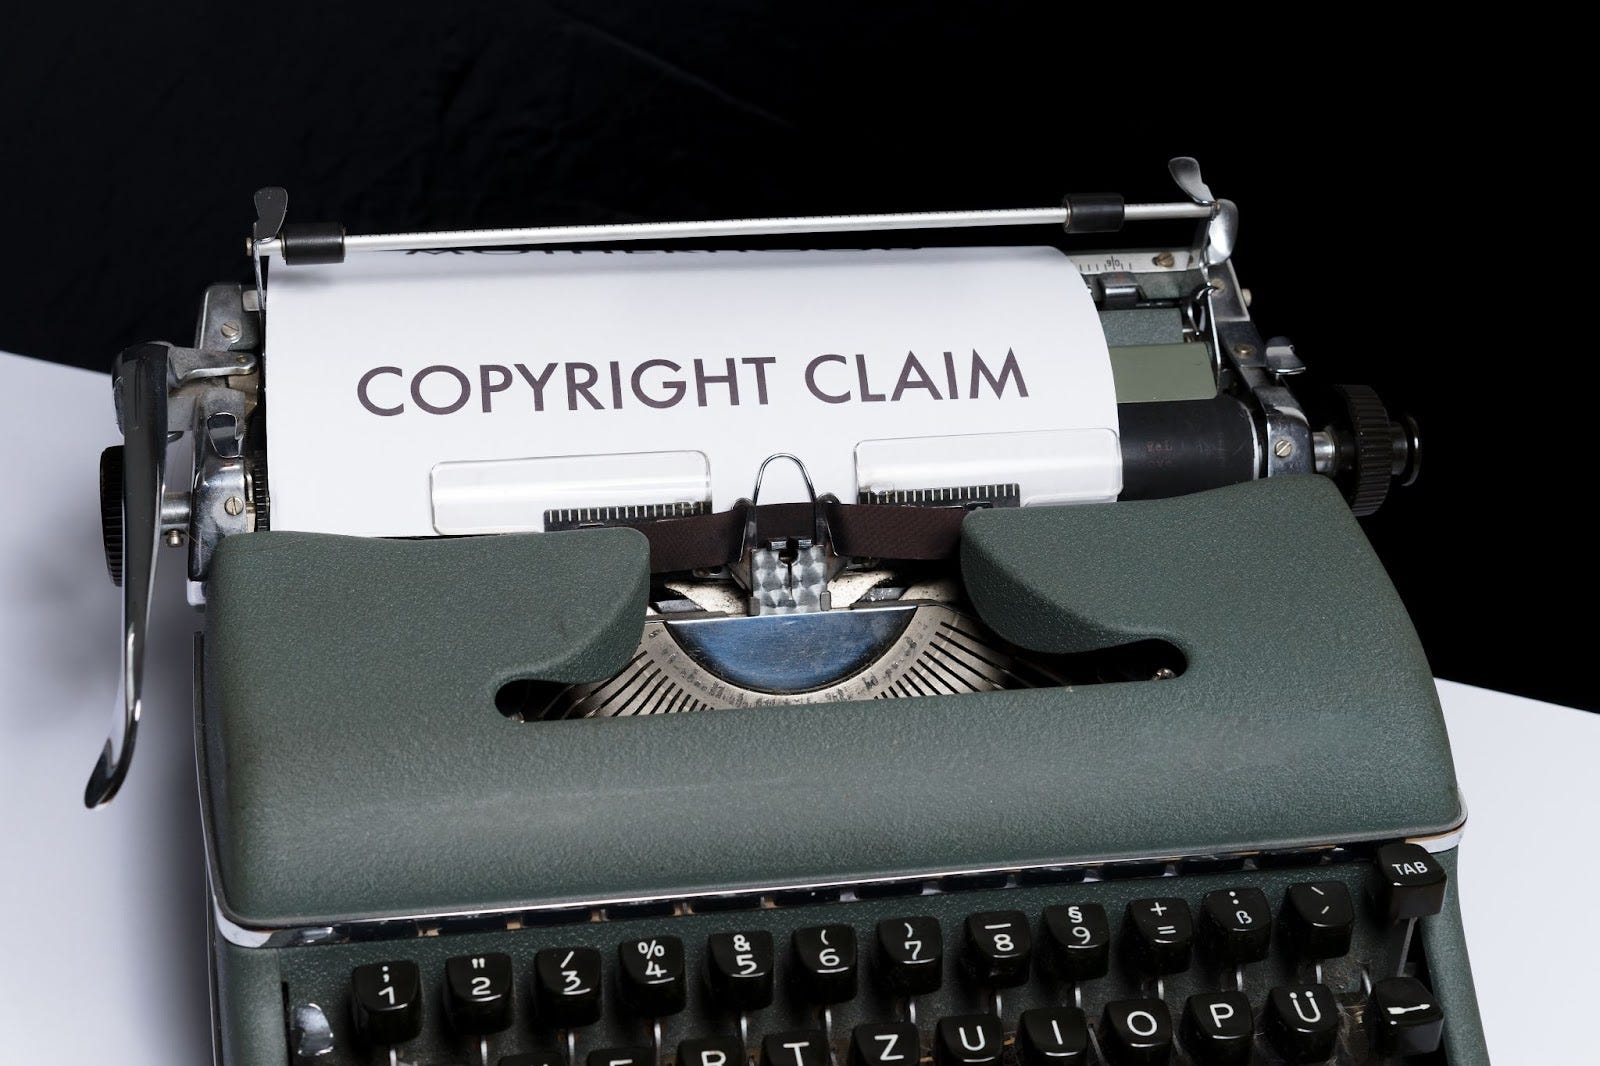 copyright claim typewritten on a paper